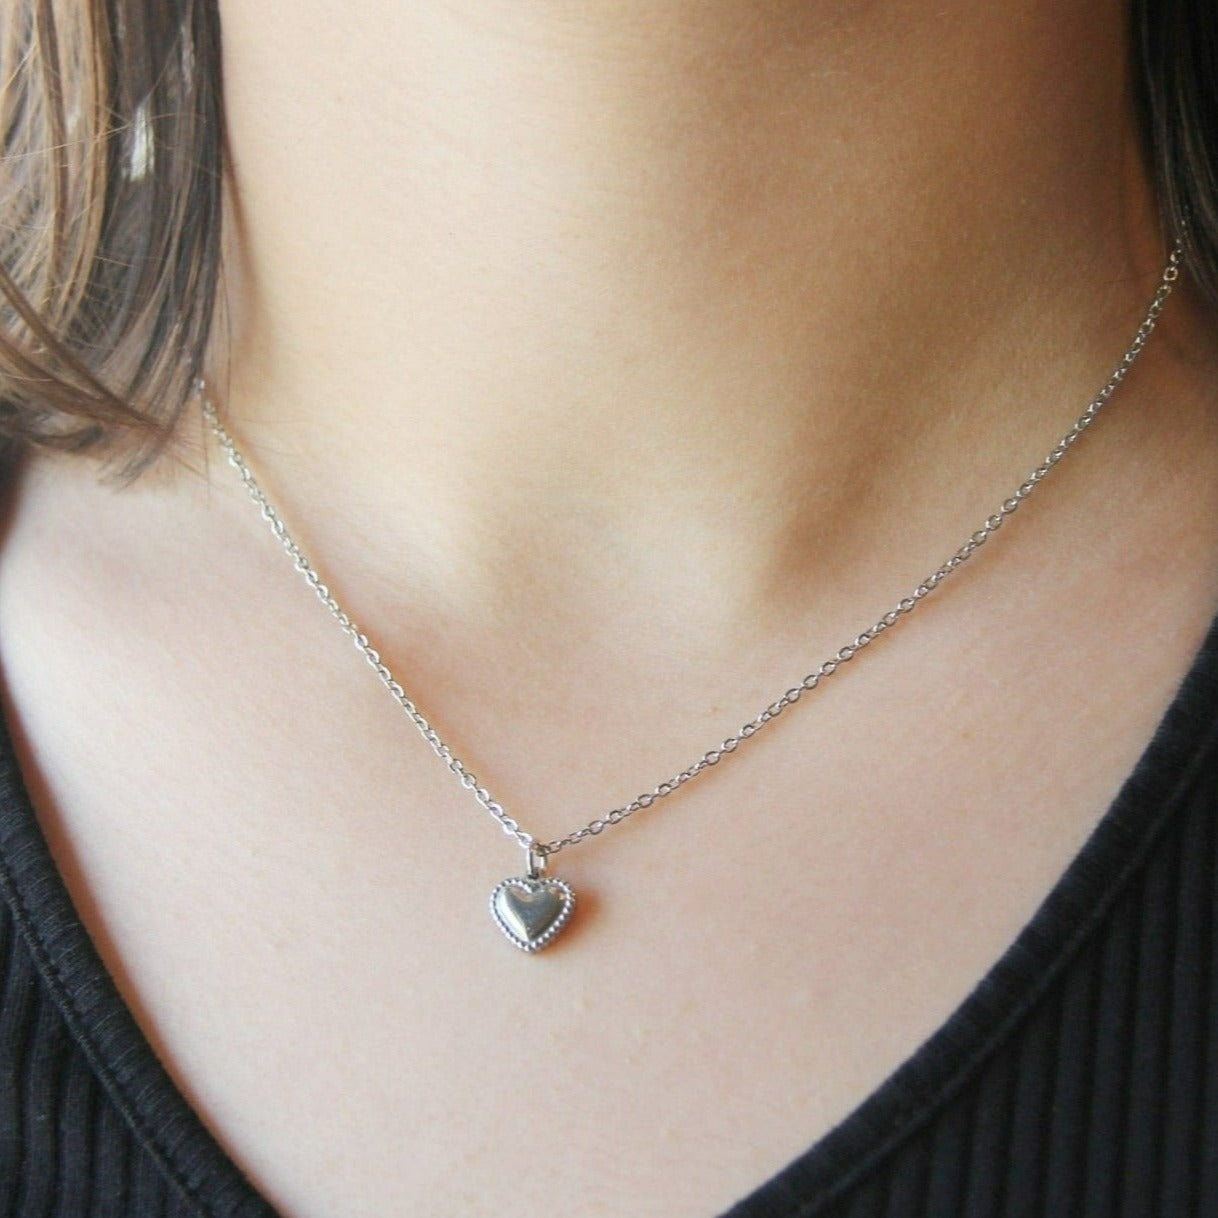 NEW! Chic and dainty triangular locket pendant – Lai